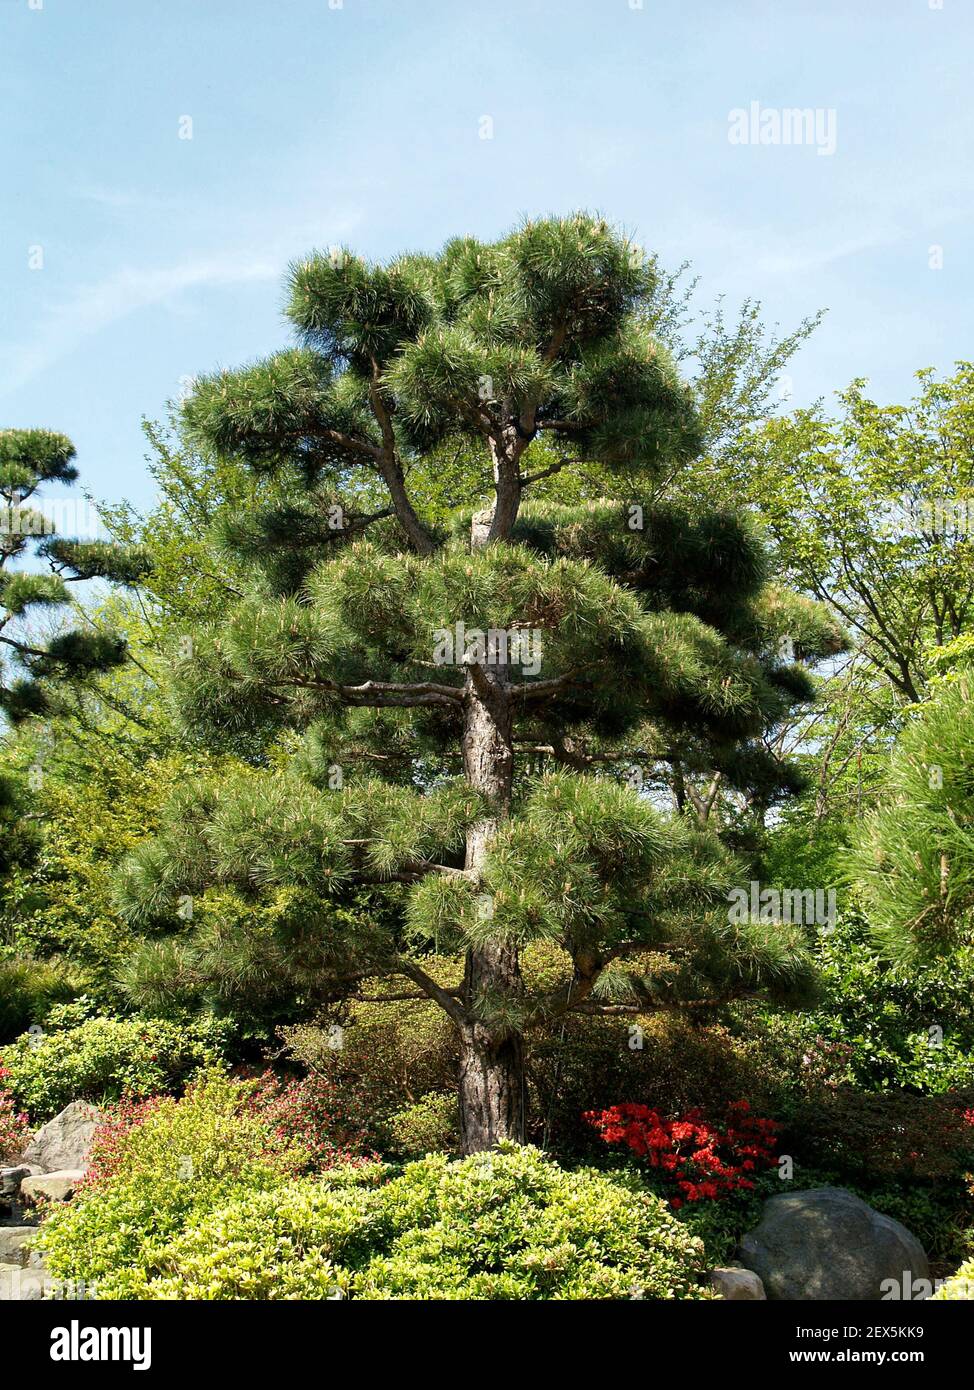 Japanese Red Pine, Pinus densiflora 'Pendula' Stock Photo - Alamy